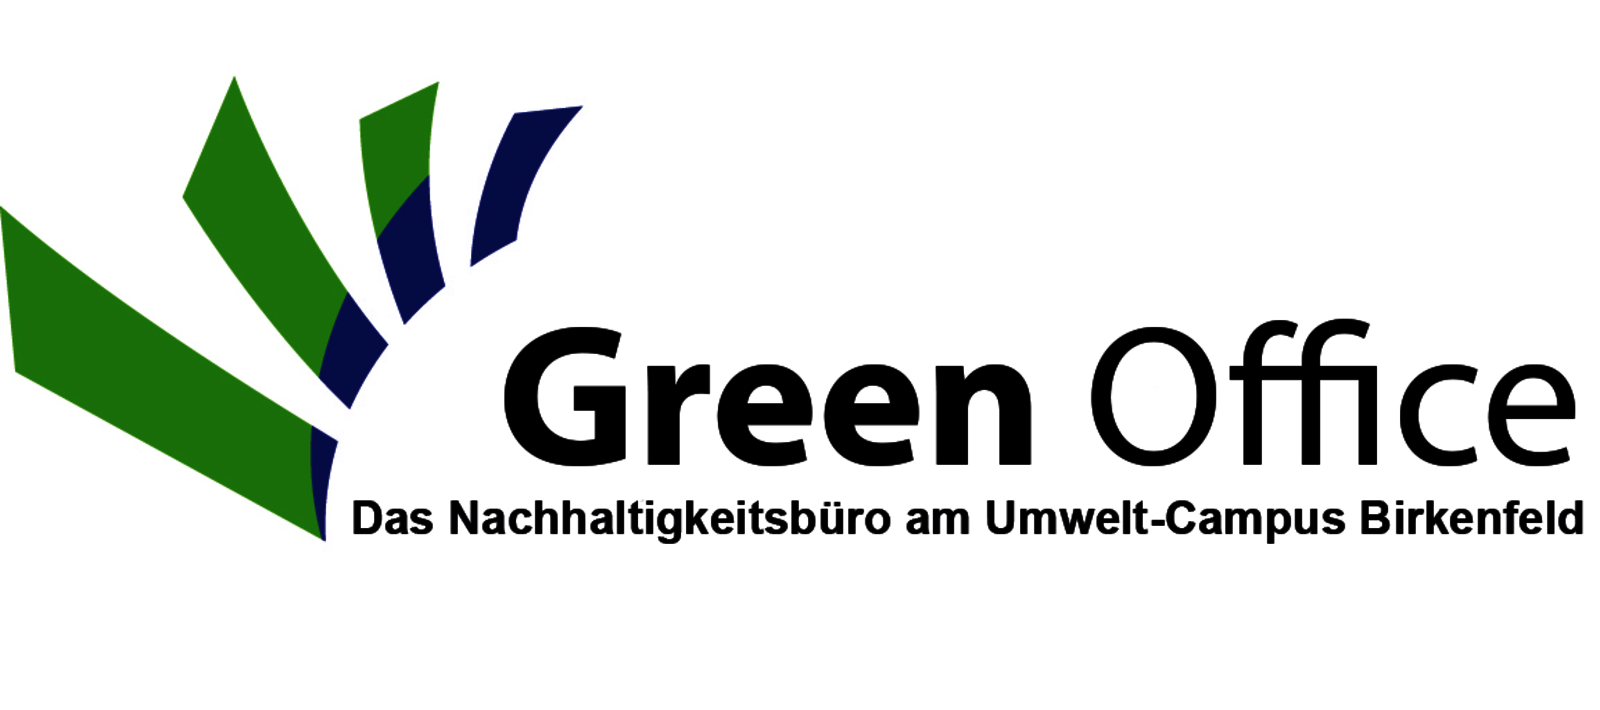 Green Office Umweltcampus Birkenfeld Logo